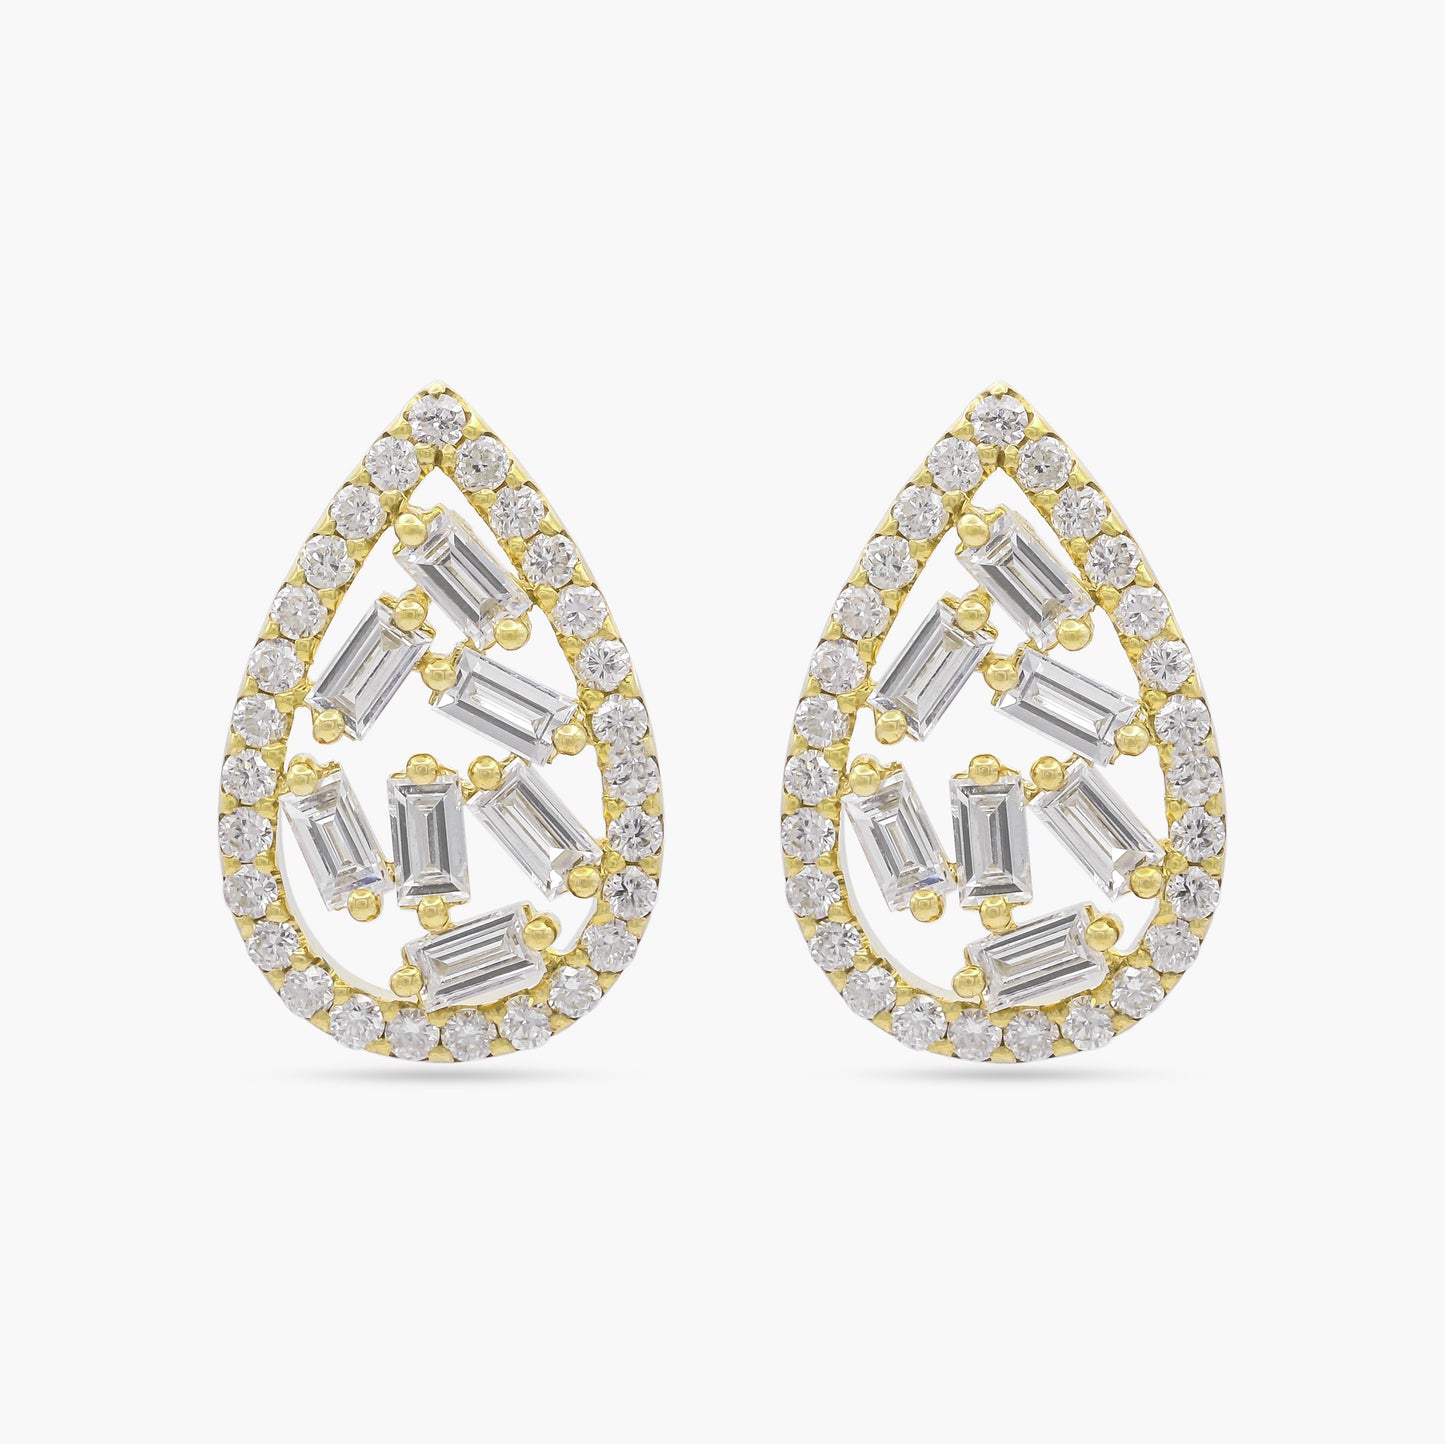 9ct Yellow Gold Pear Shaped Diamond Stud Earrings